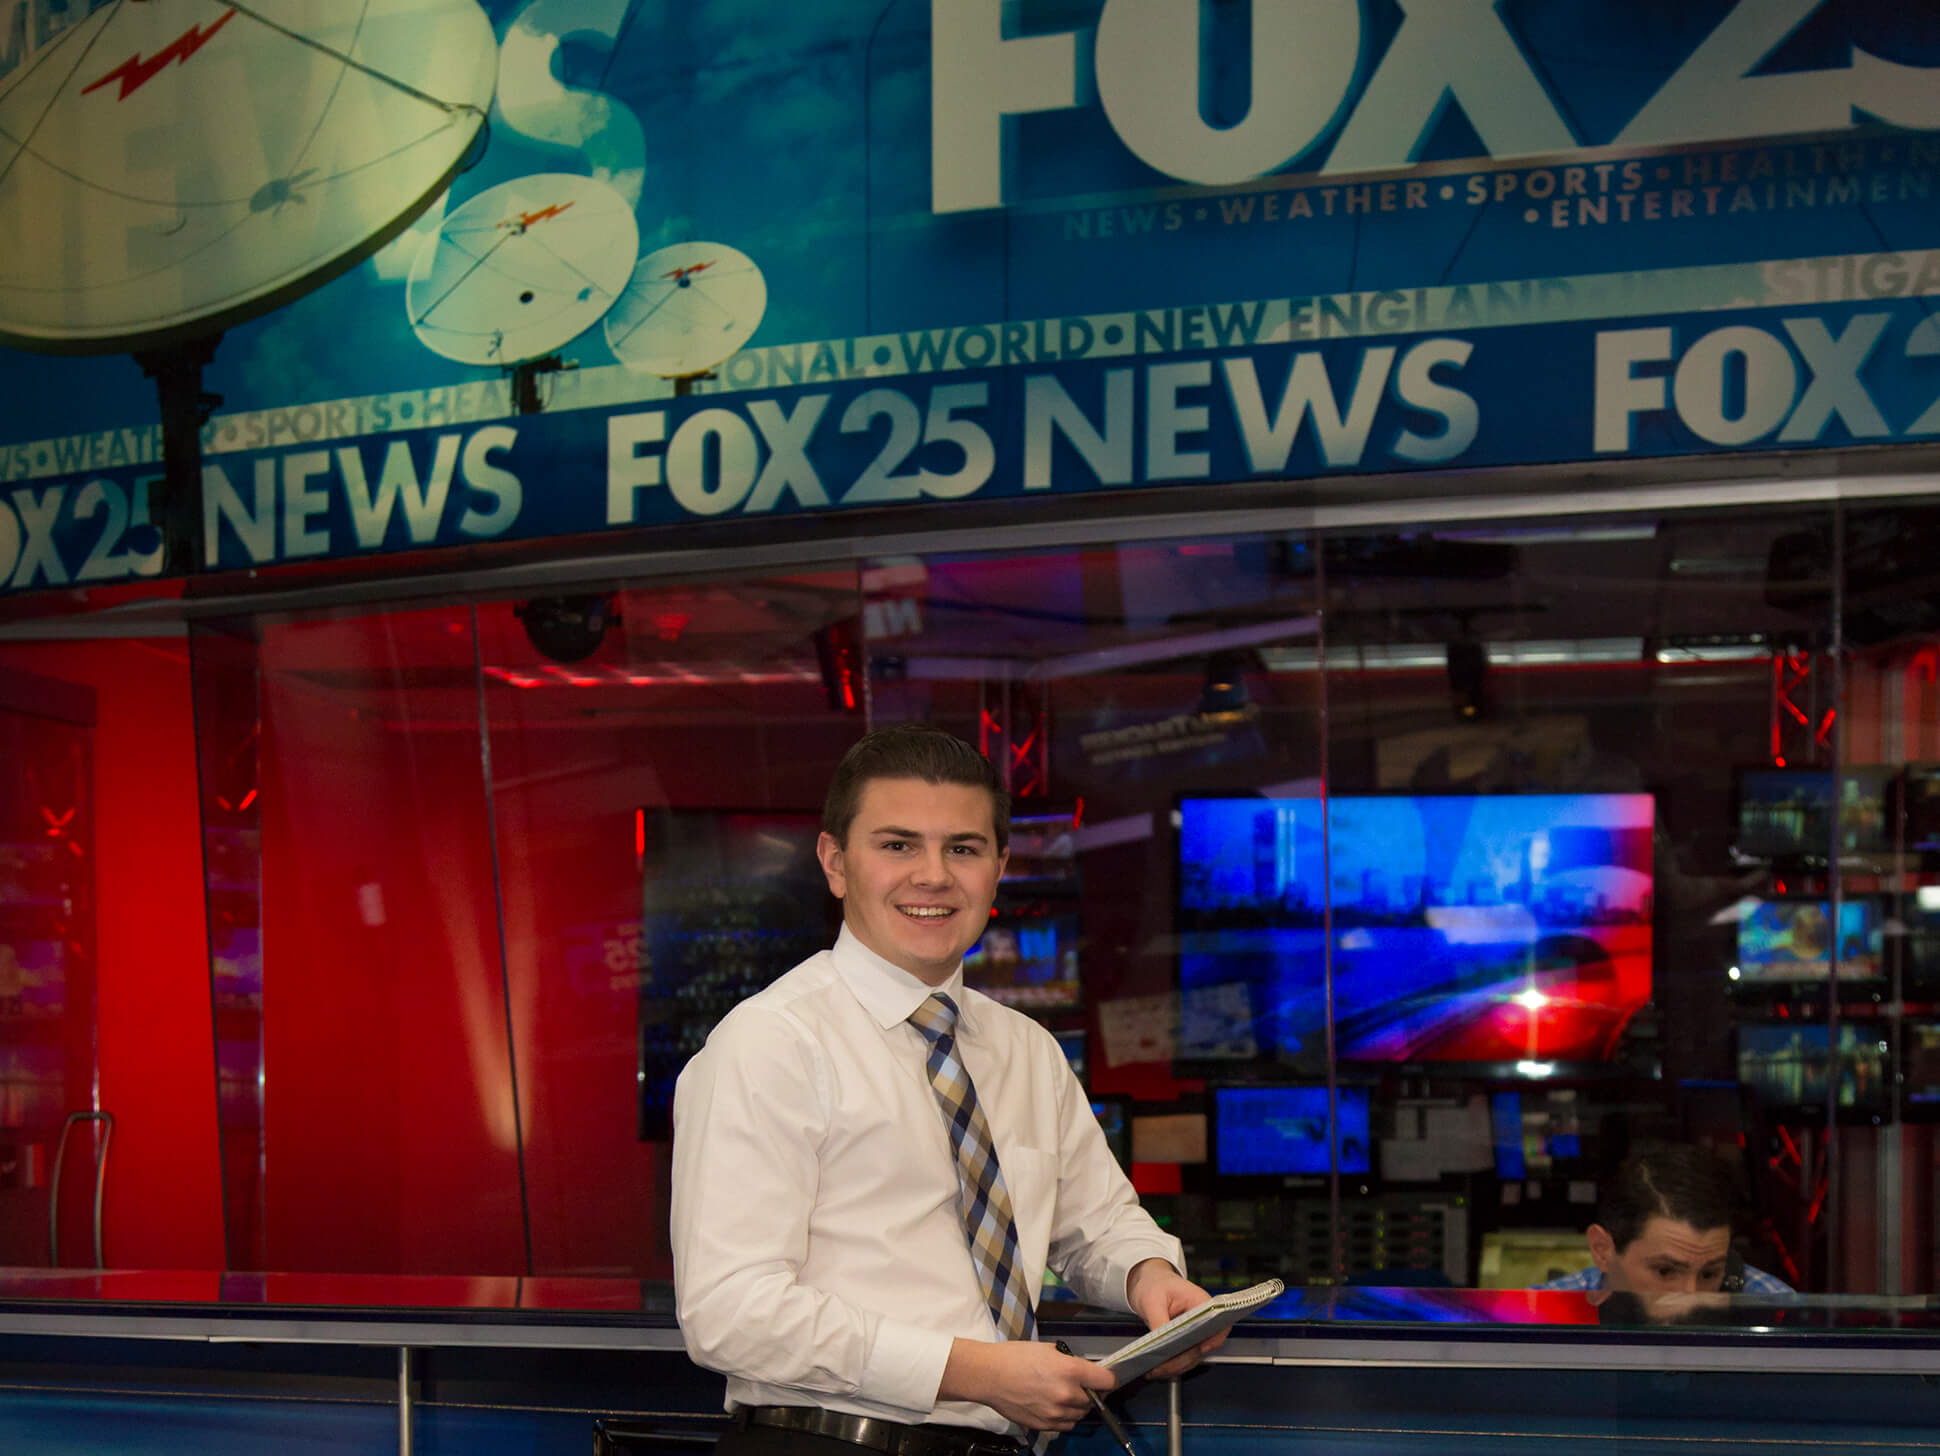 intern at Fox news station